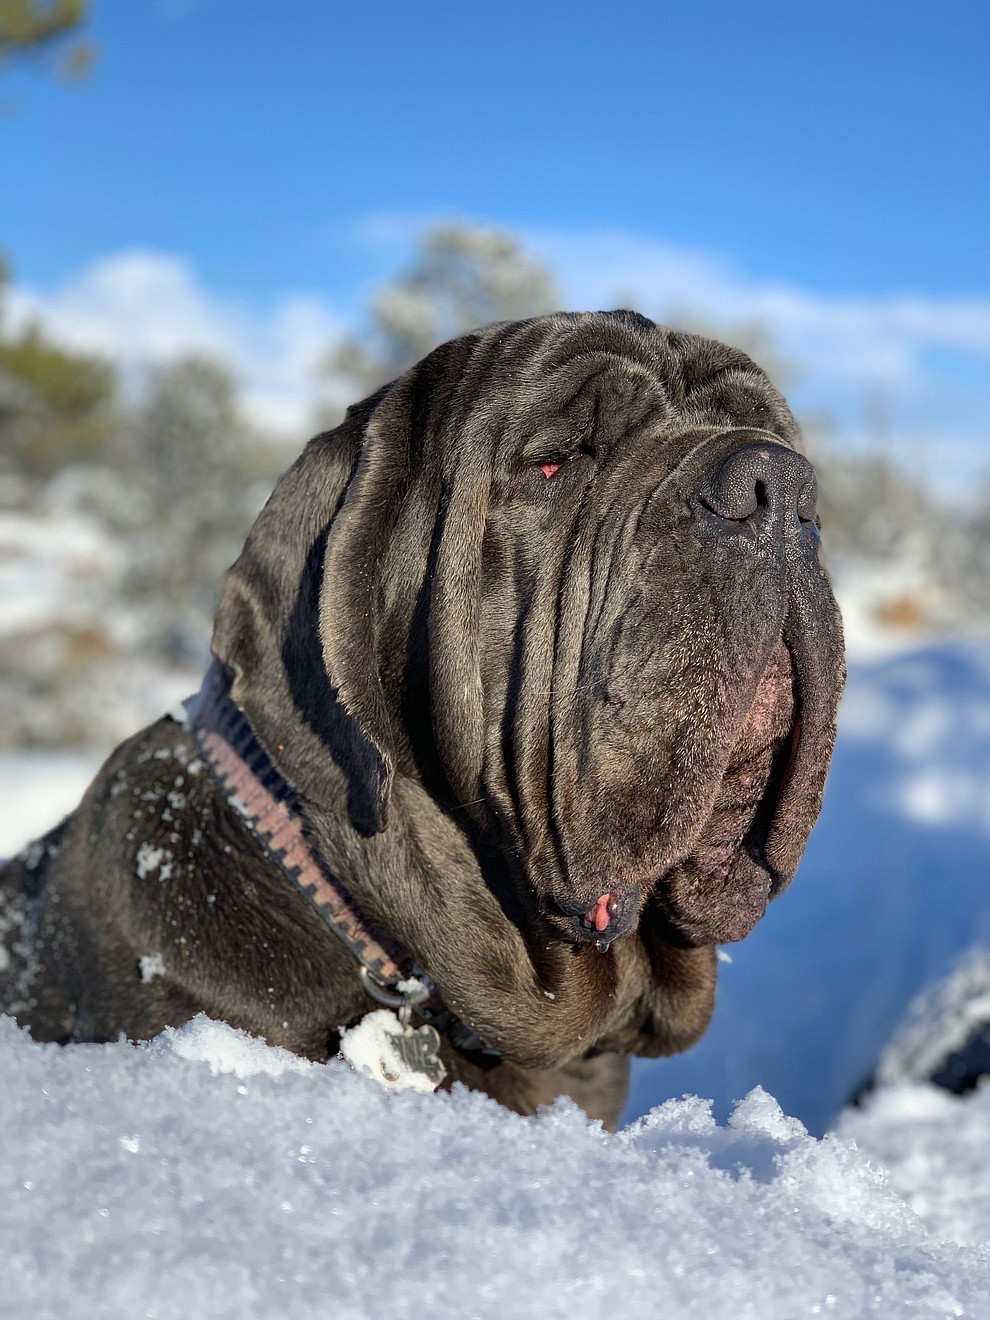 Our Neapolitan mastiff “Sue” in the snow.